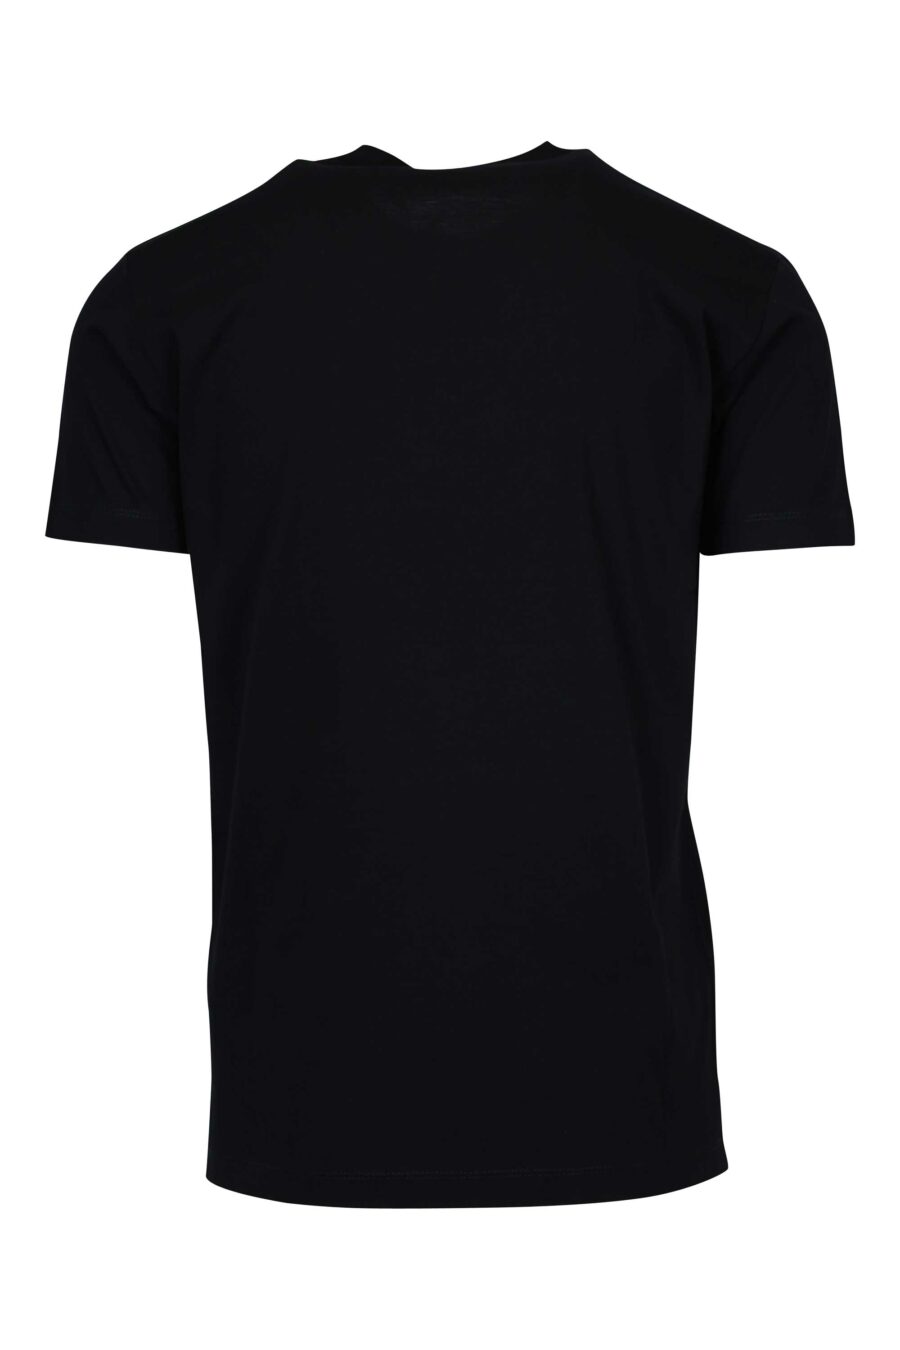 T-shirt preta com maxilogo retro multicolorido - 8054148447502 1